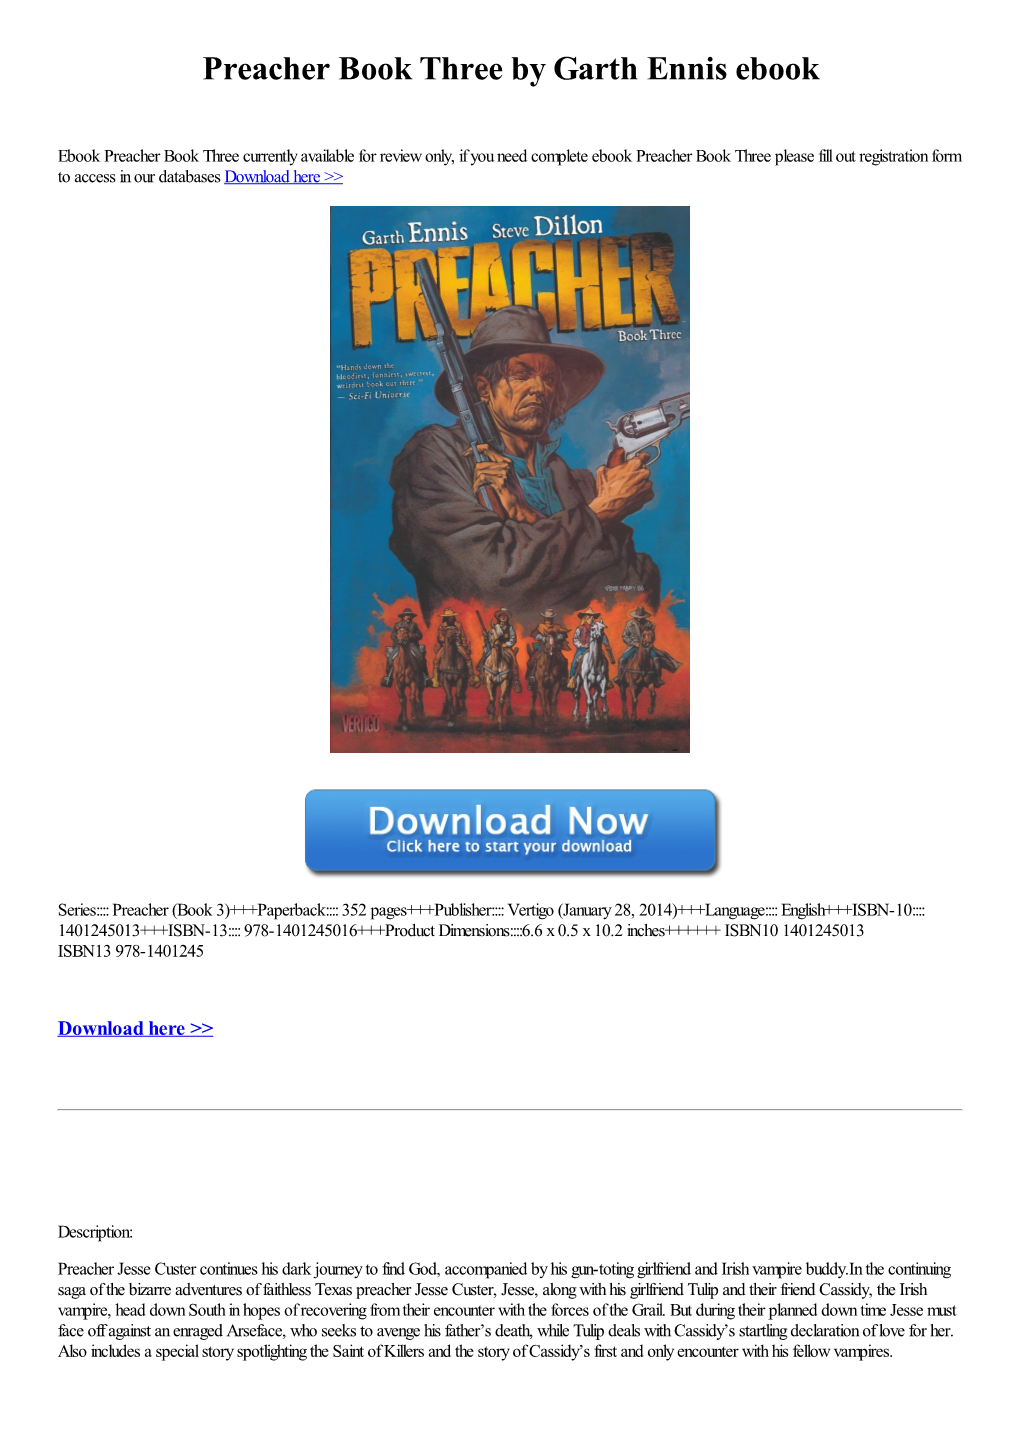 Preacher Book Three by Garth Ennis Ebook